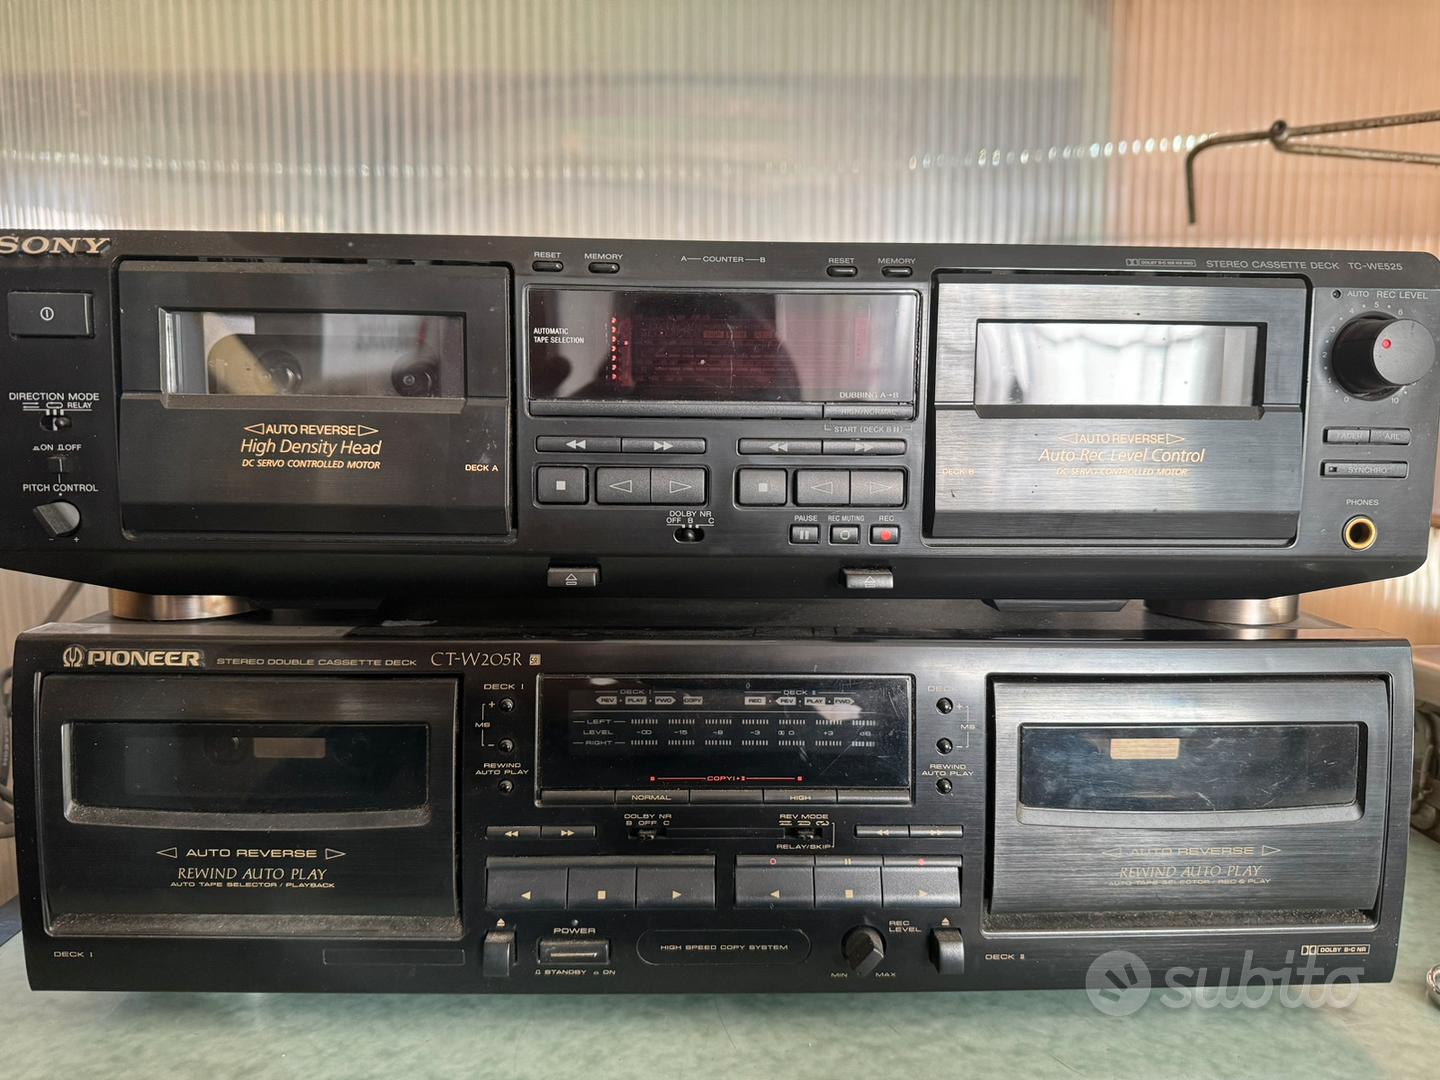 Lettore cassette - Audio/Video In vendita a Verona